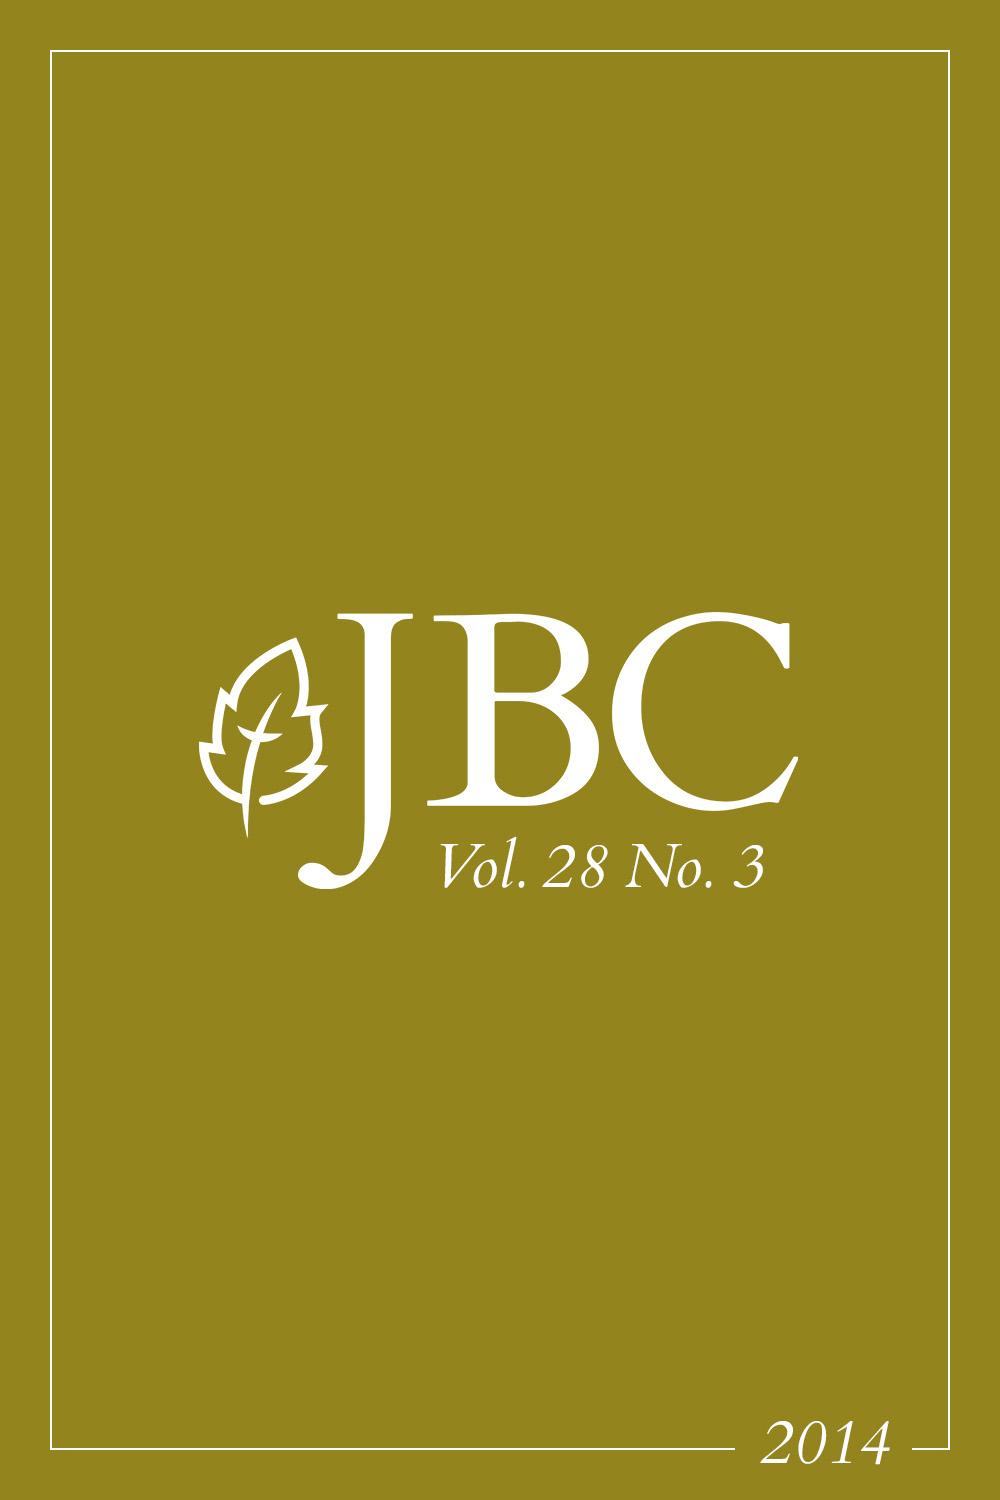 JBC Volume 28:3 (2014) PDF Featured Image